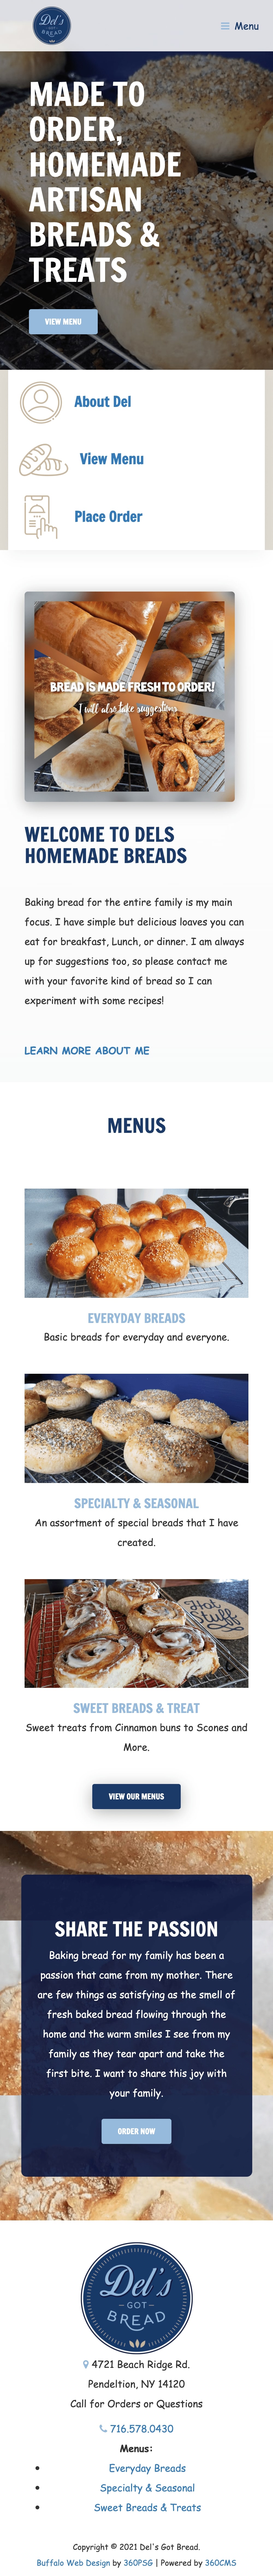 Del's Got Bread Website - Mobile